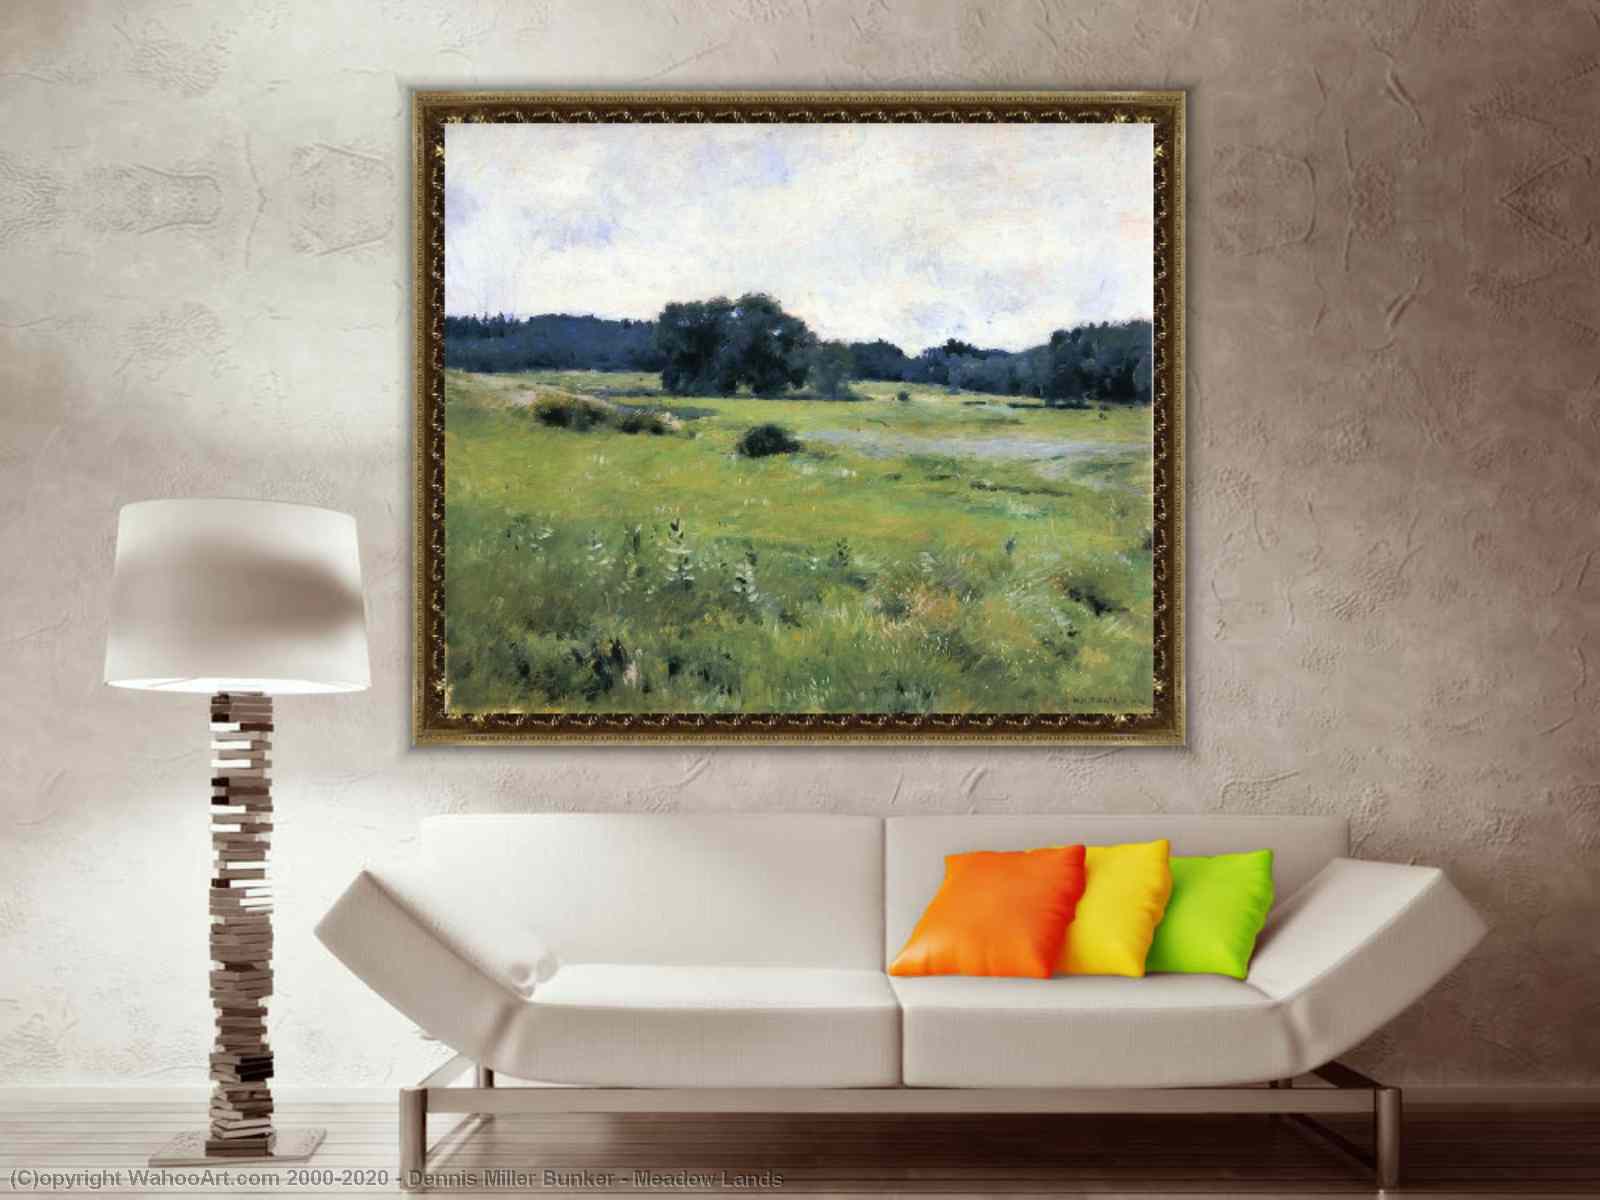 Artwork Replica | Meadow Lands, 1890 by Dennis Miller Bunker (1861-1890 ...